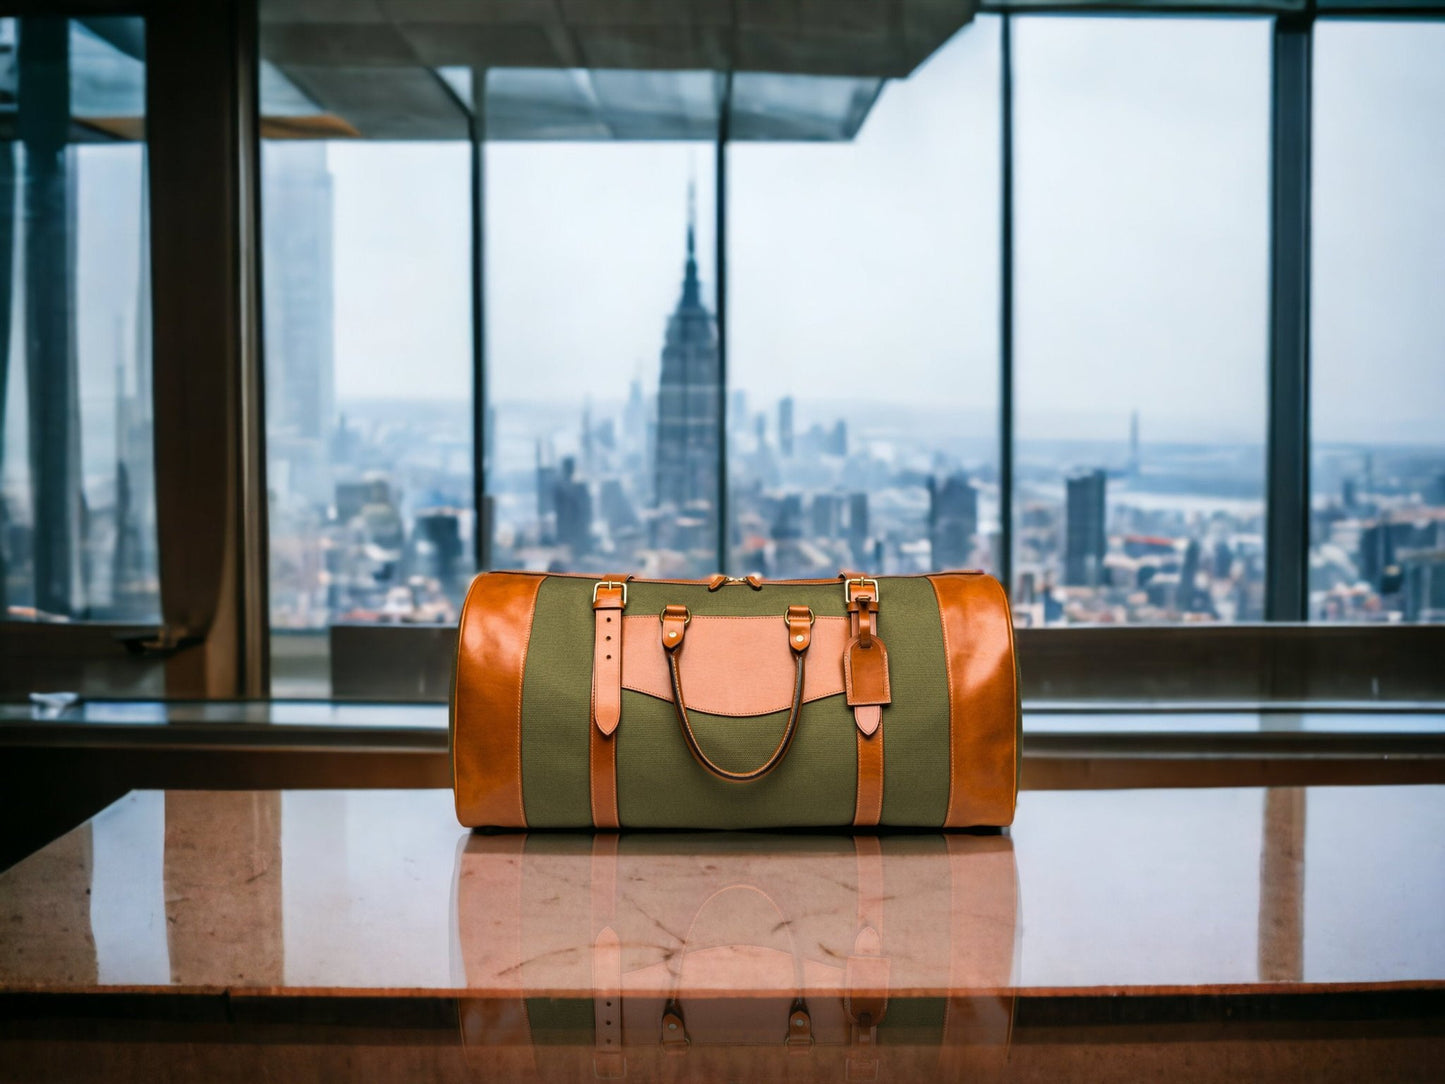 Green-Khaki-Cream | Weekender | Duffle bag | Monogrammed | Handmade Duffle Bag | Weekend Bag | Travel | Duffle Purse Crossbody | Handmade  99percenthandmade   